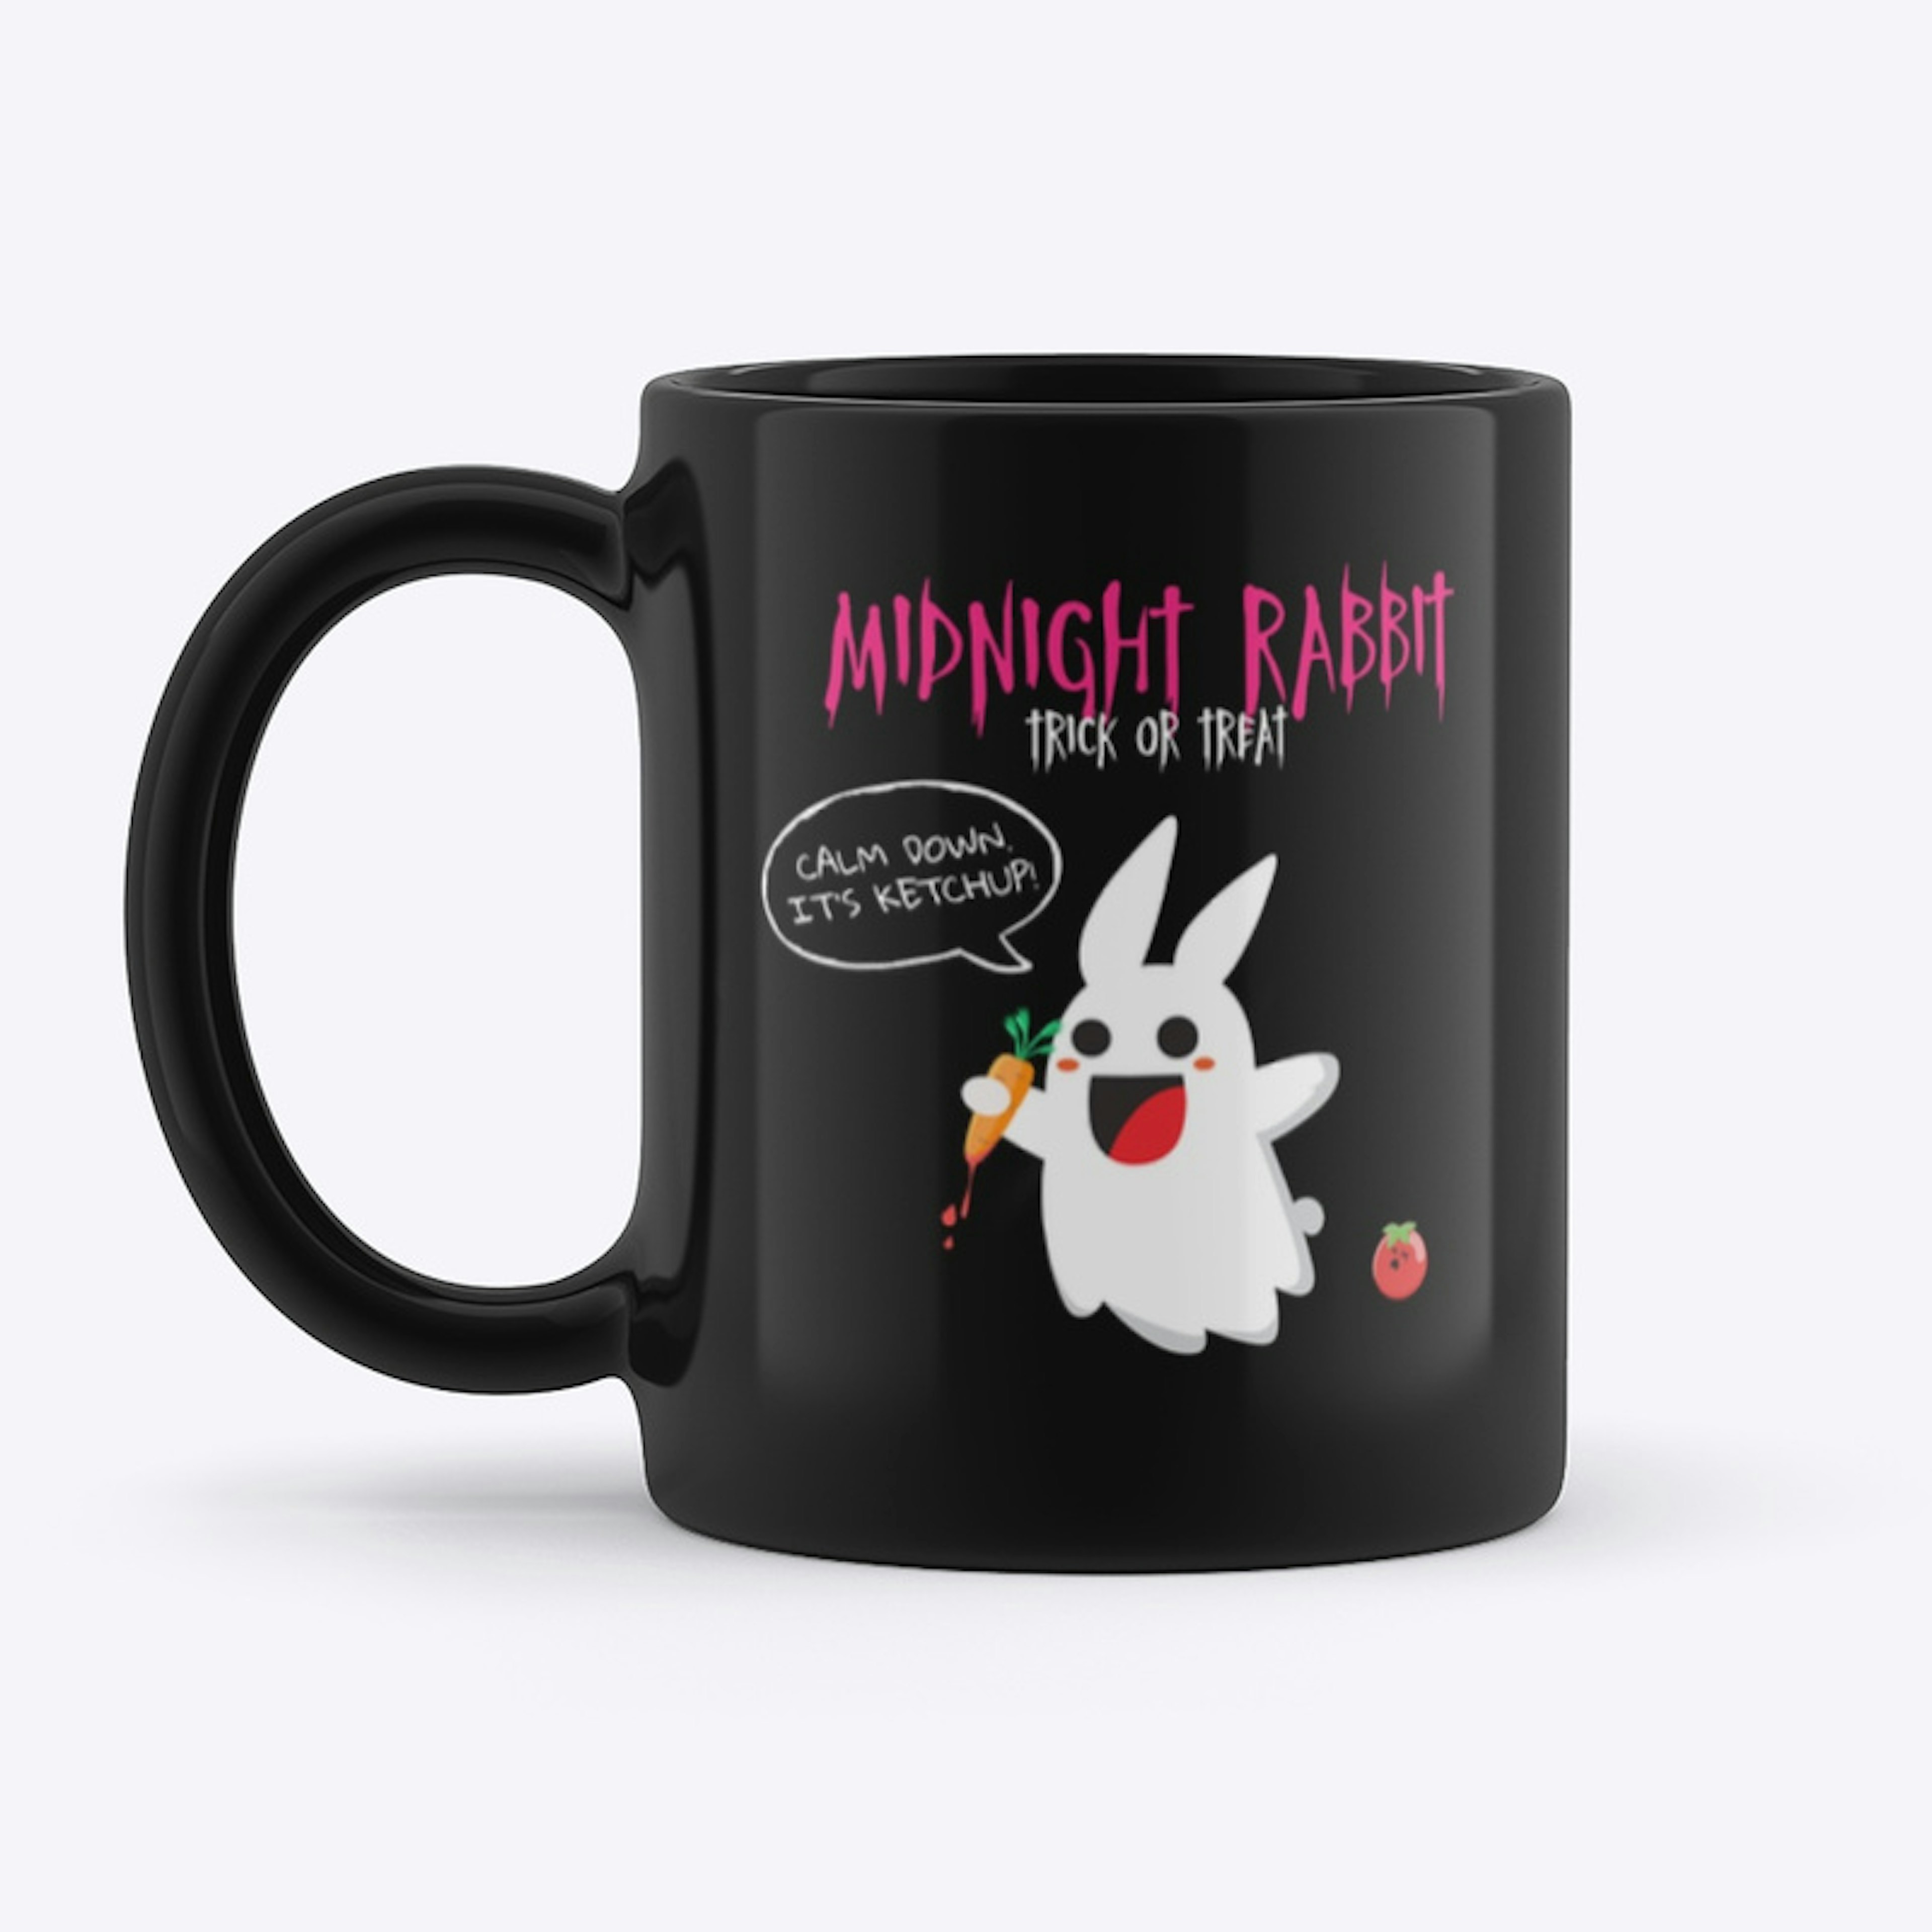 Midnight Rabbit - Trick or Treat